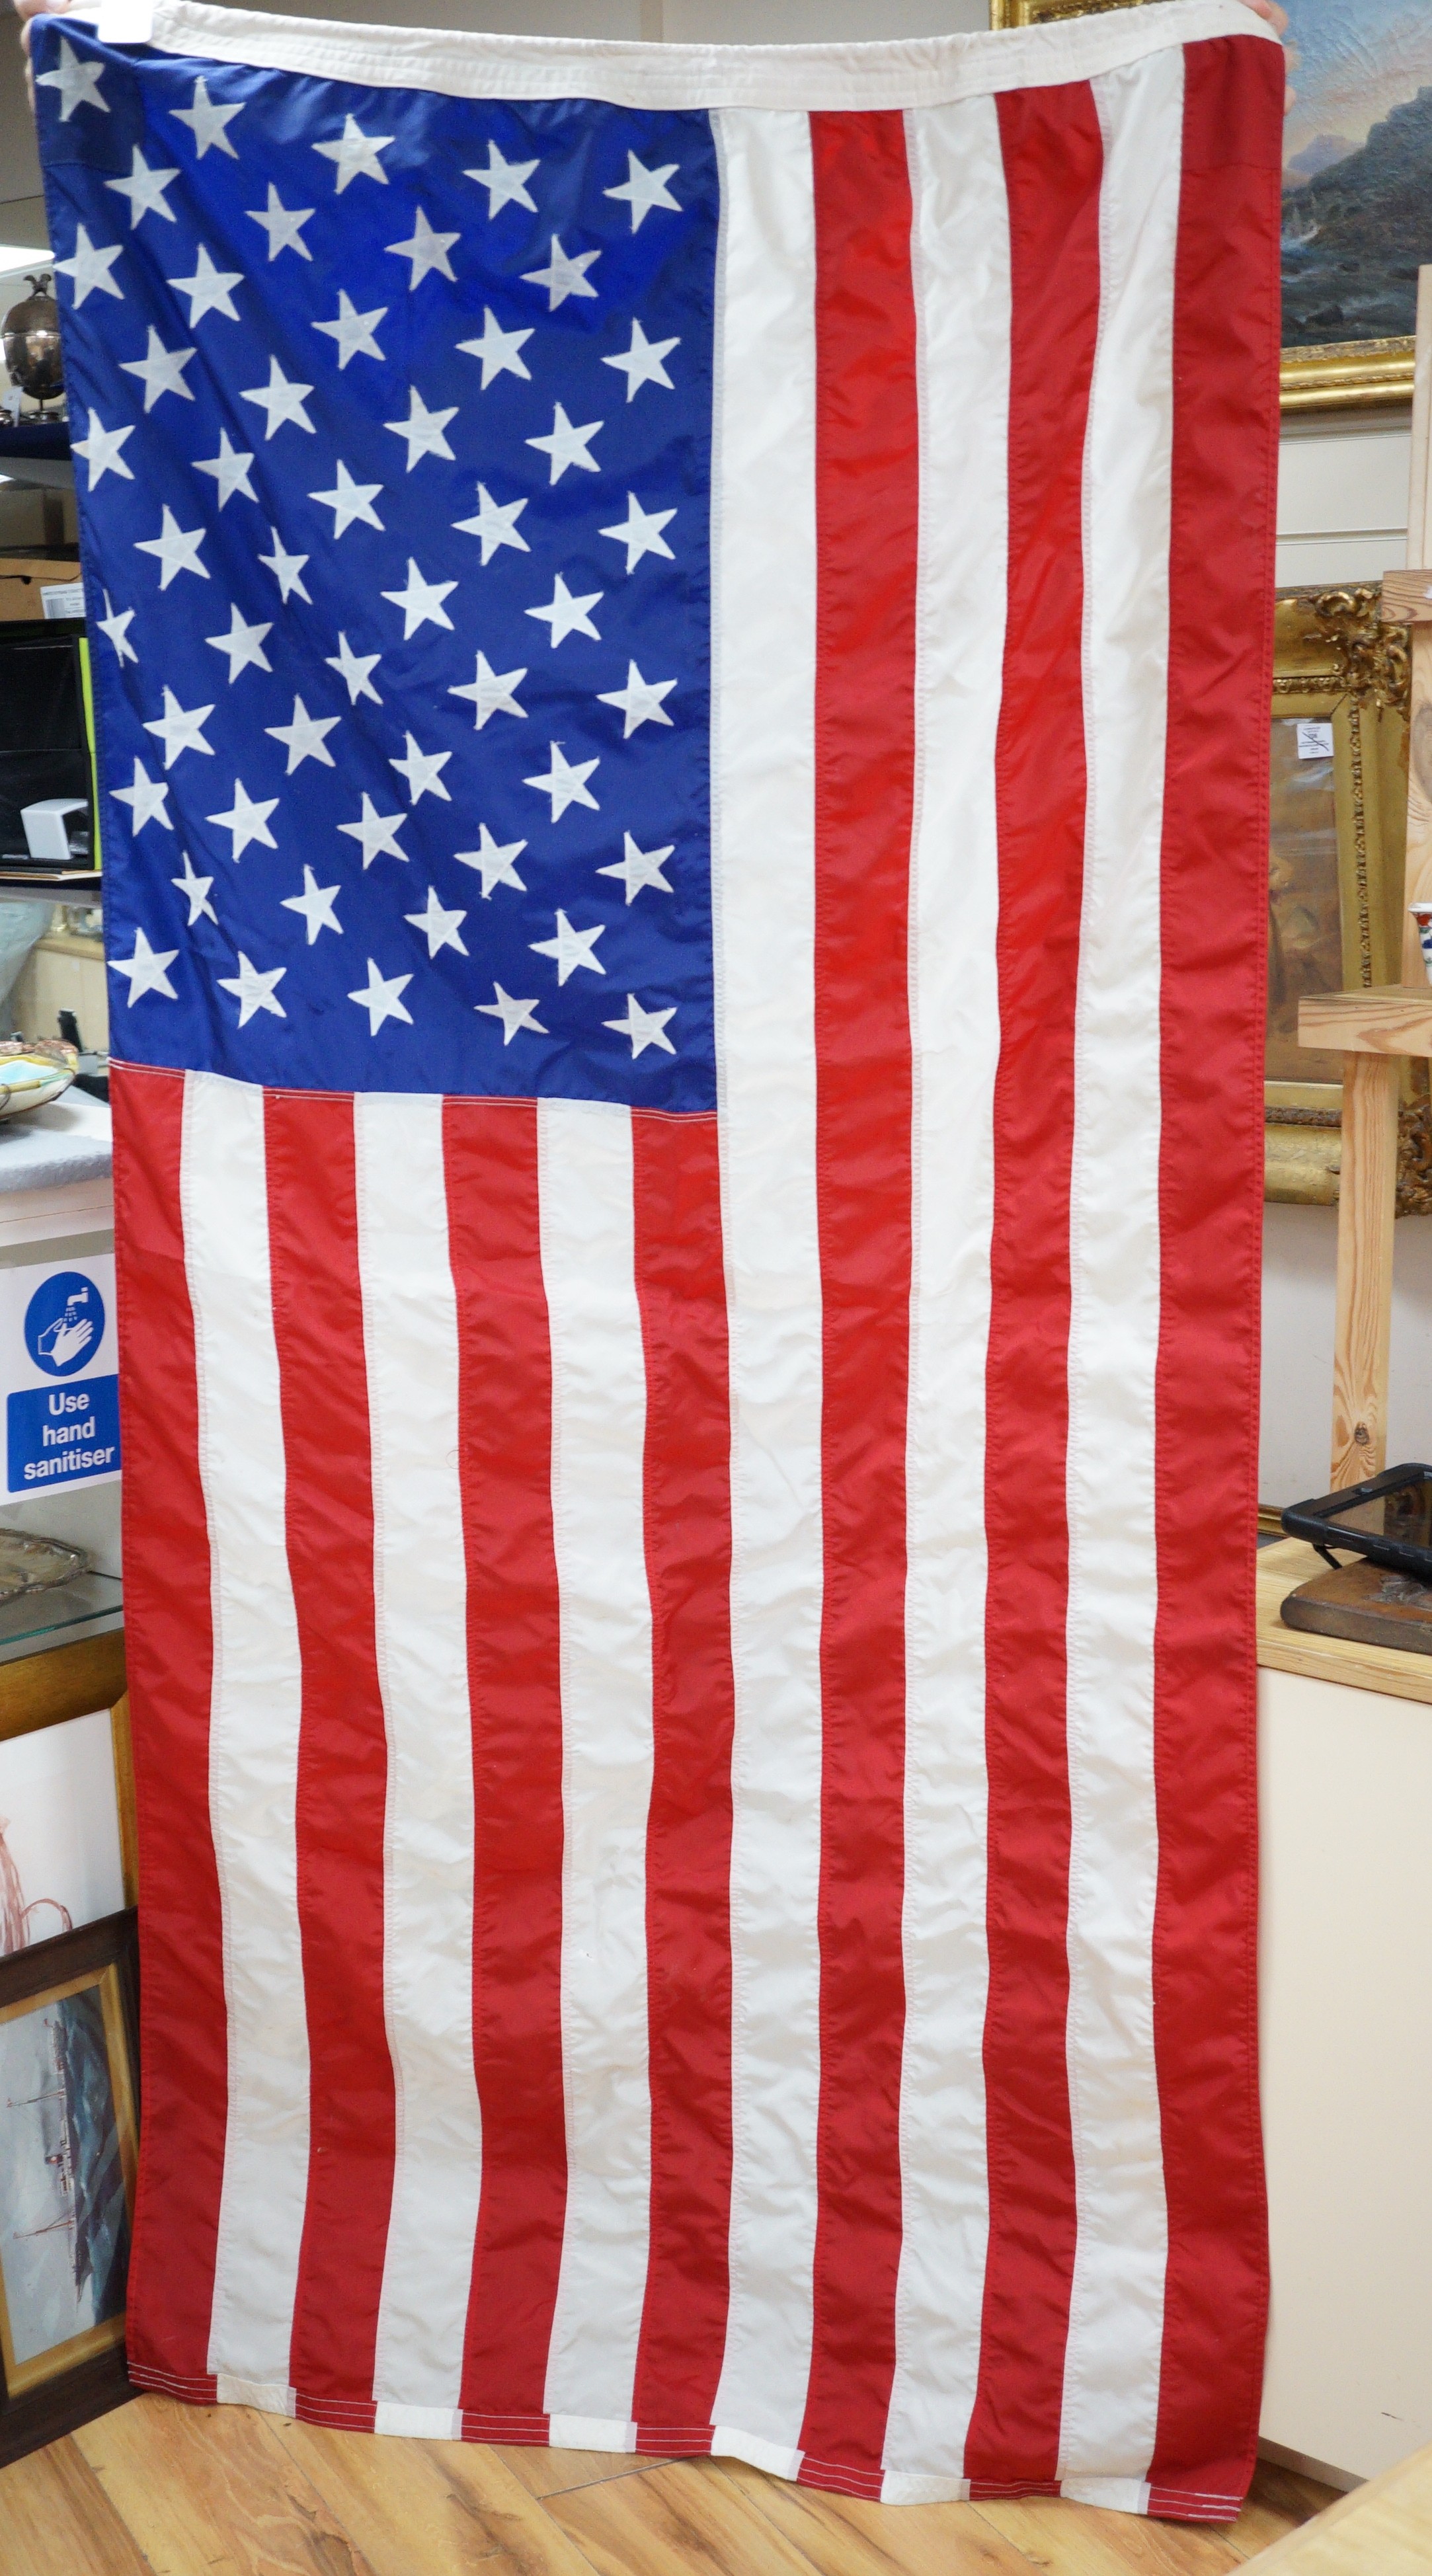 A large USA flag (sewn stars & stripes)